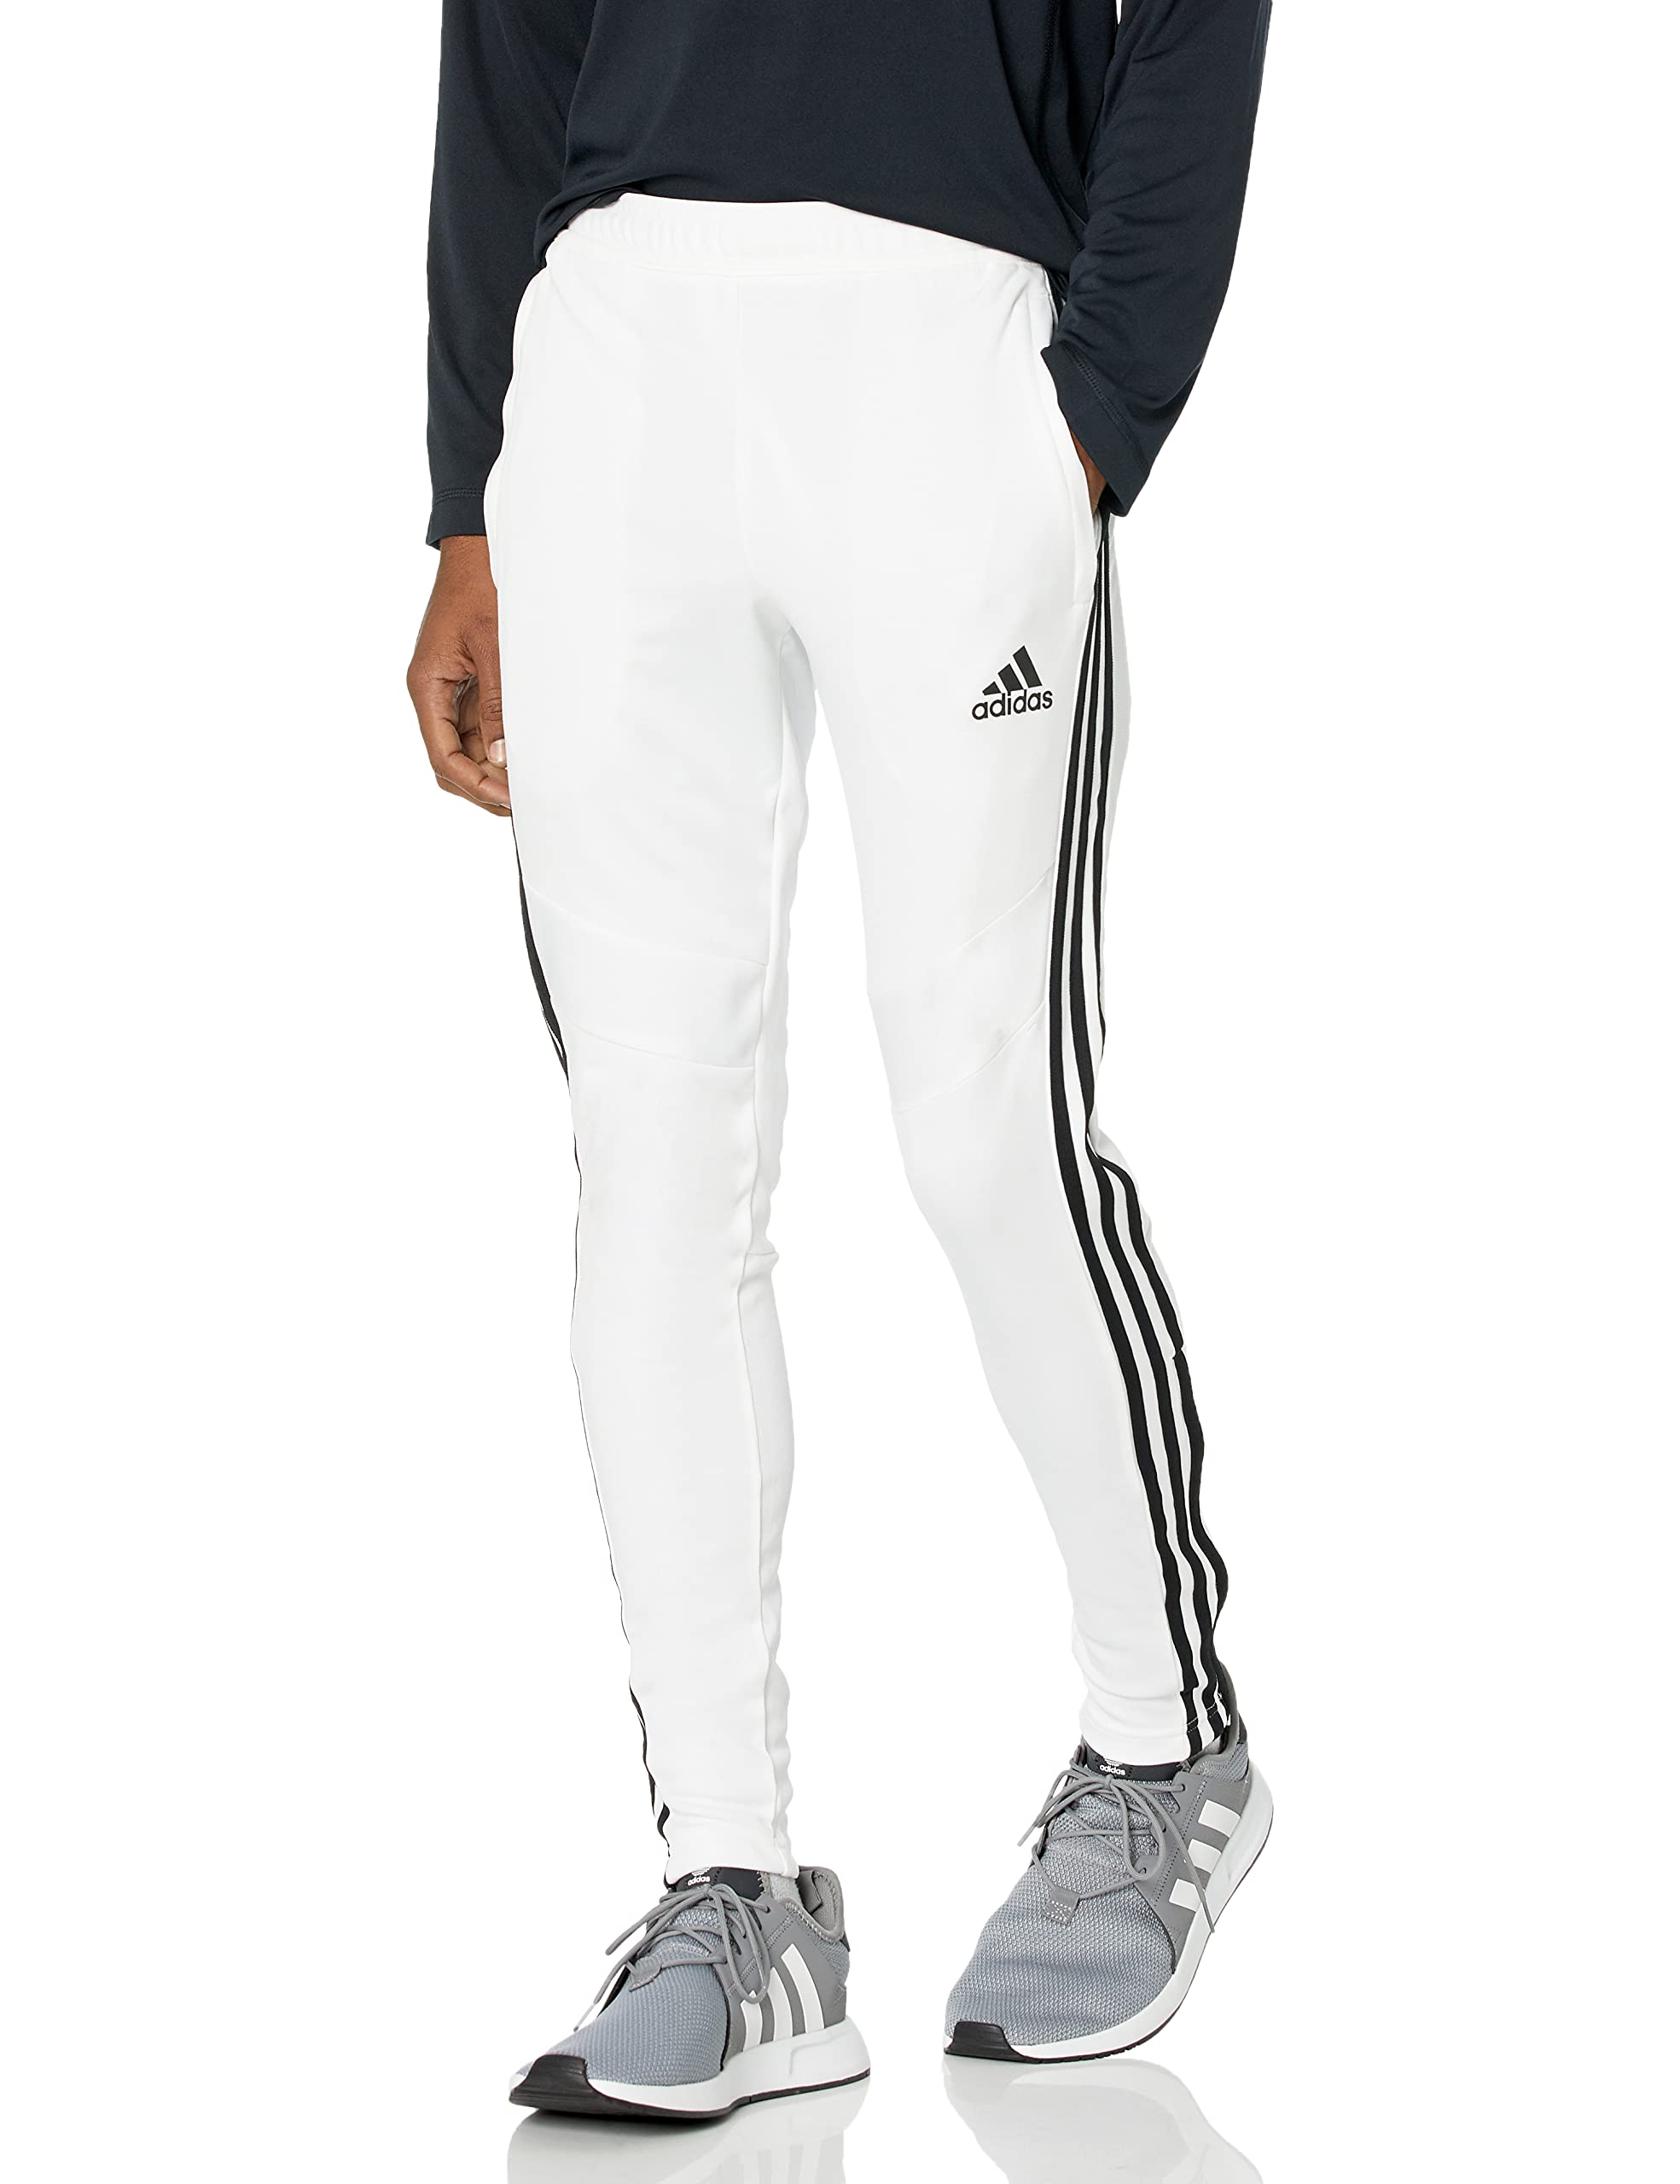 Adidas Tiro17 Training Pant – Black | BK Sports